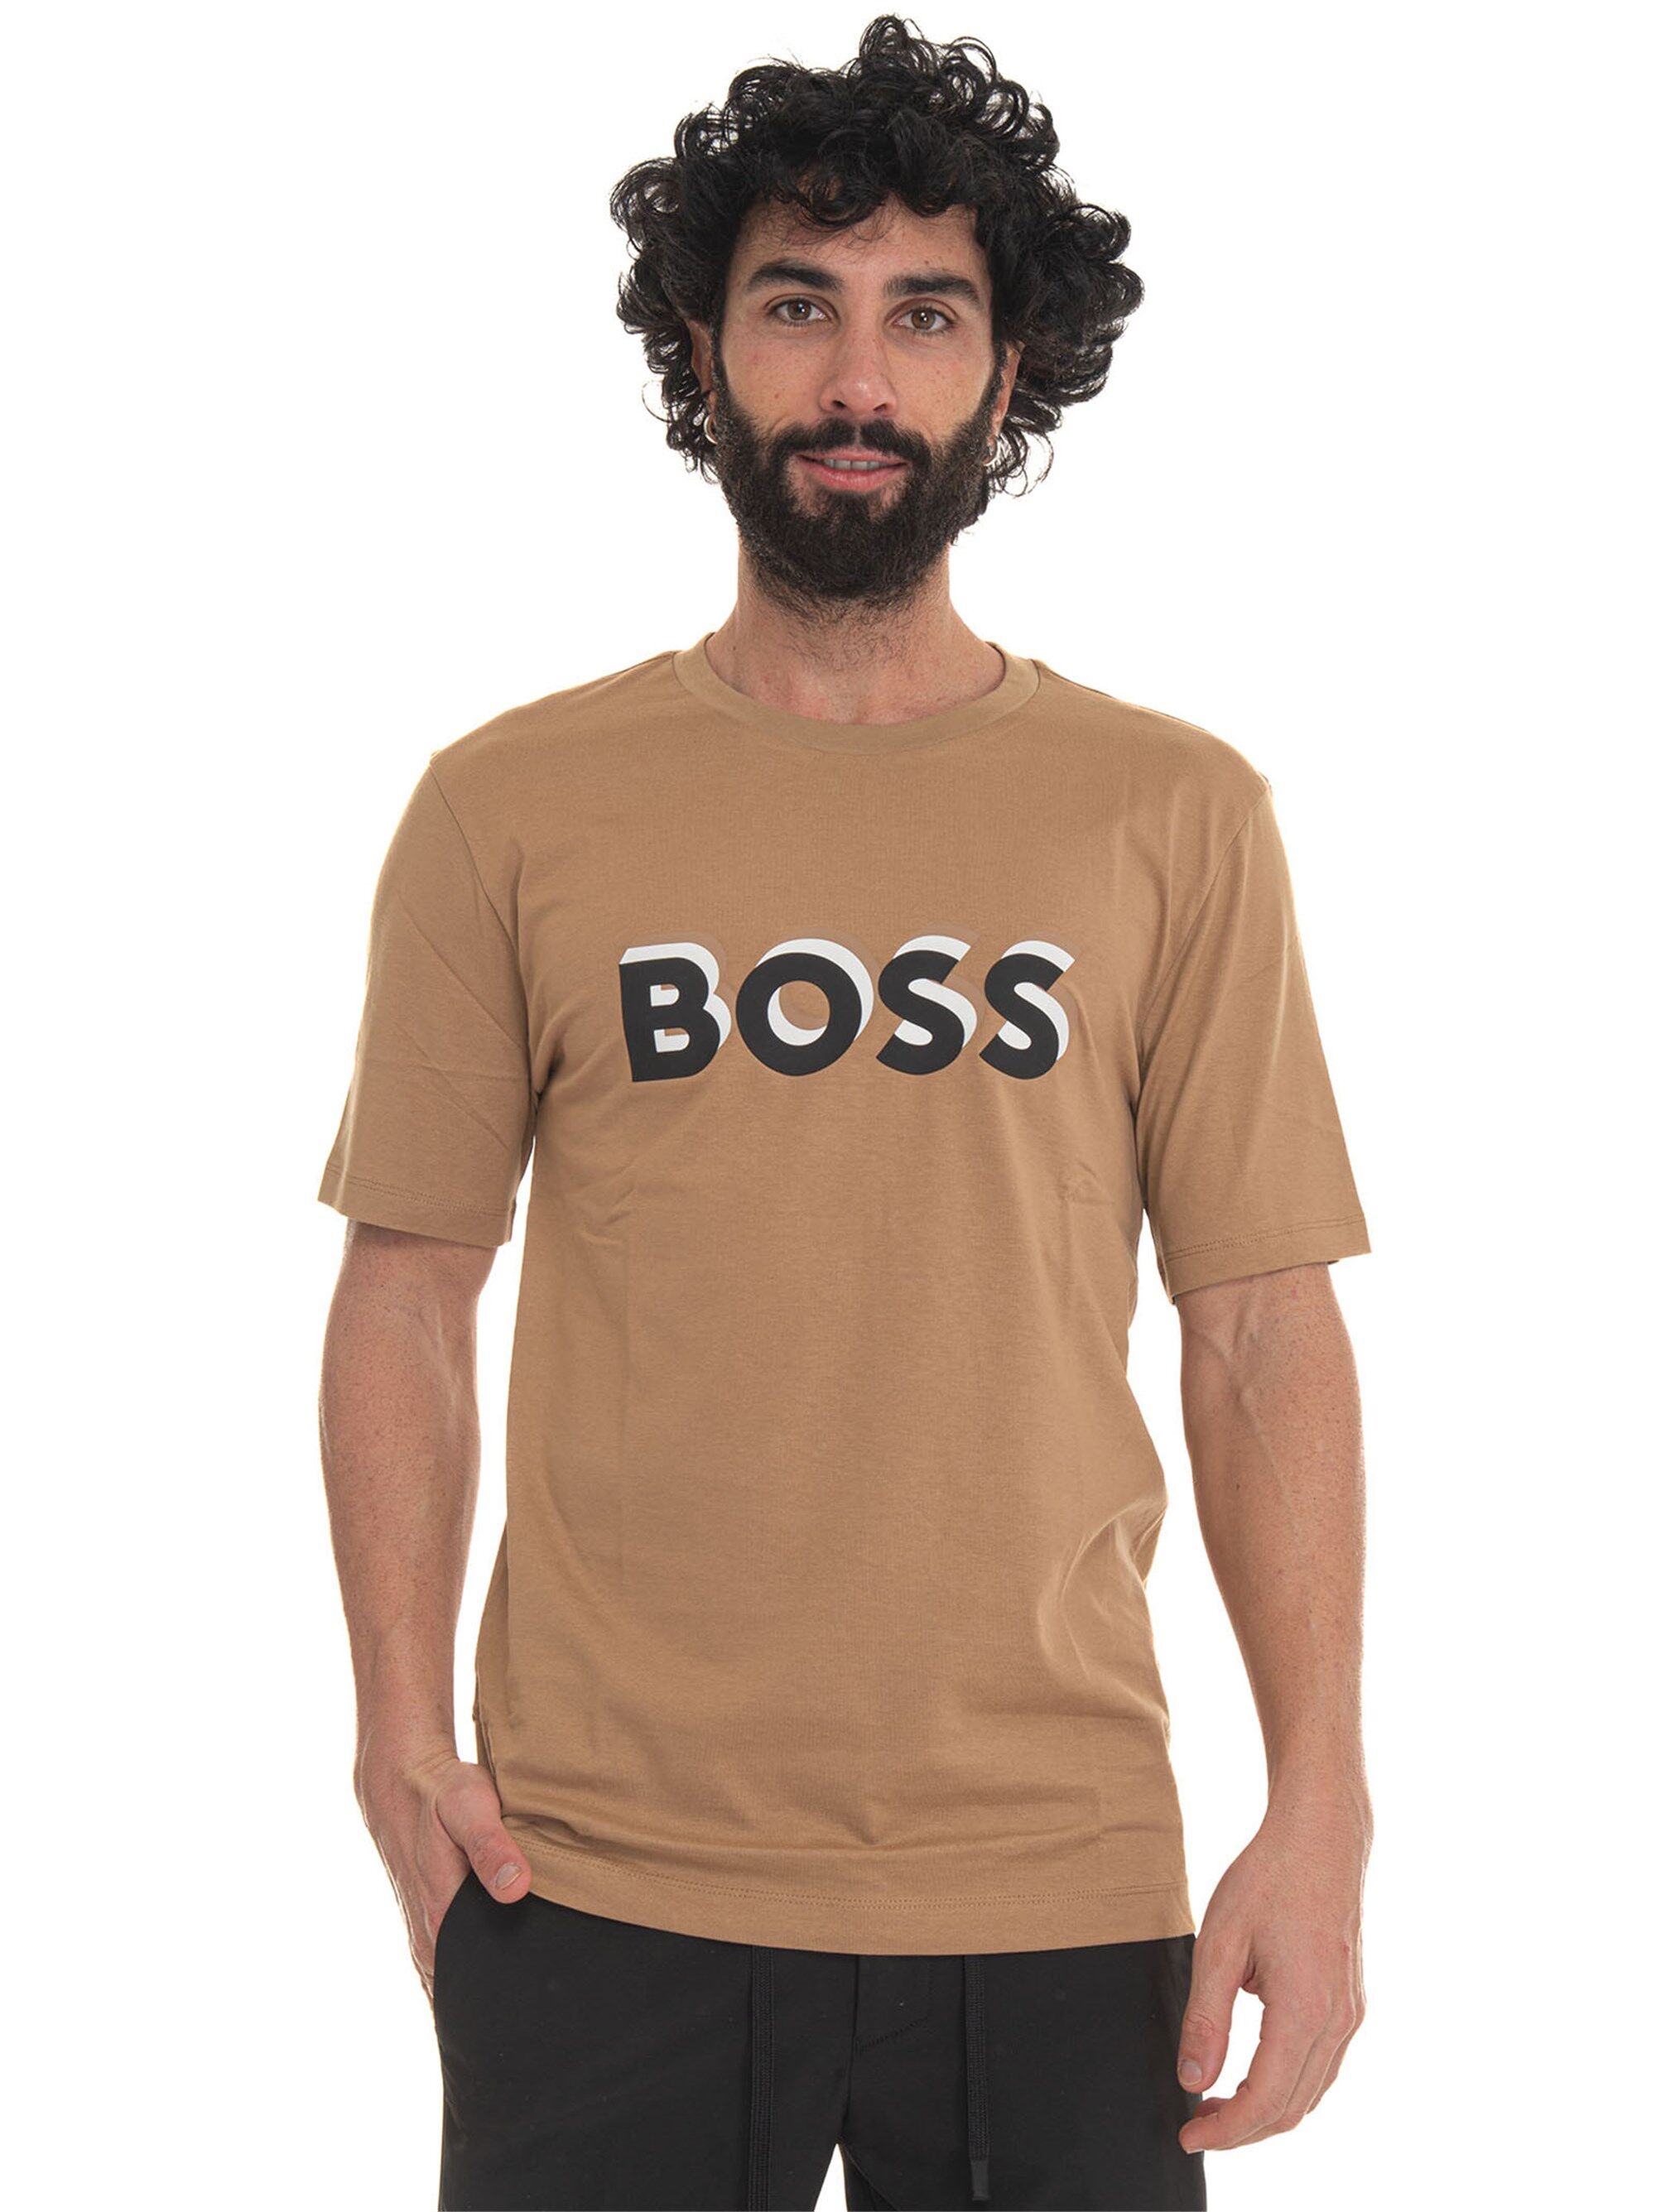 Boss T-shirt girocollo mezza manica Beige Uomo M